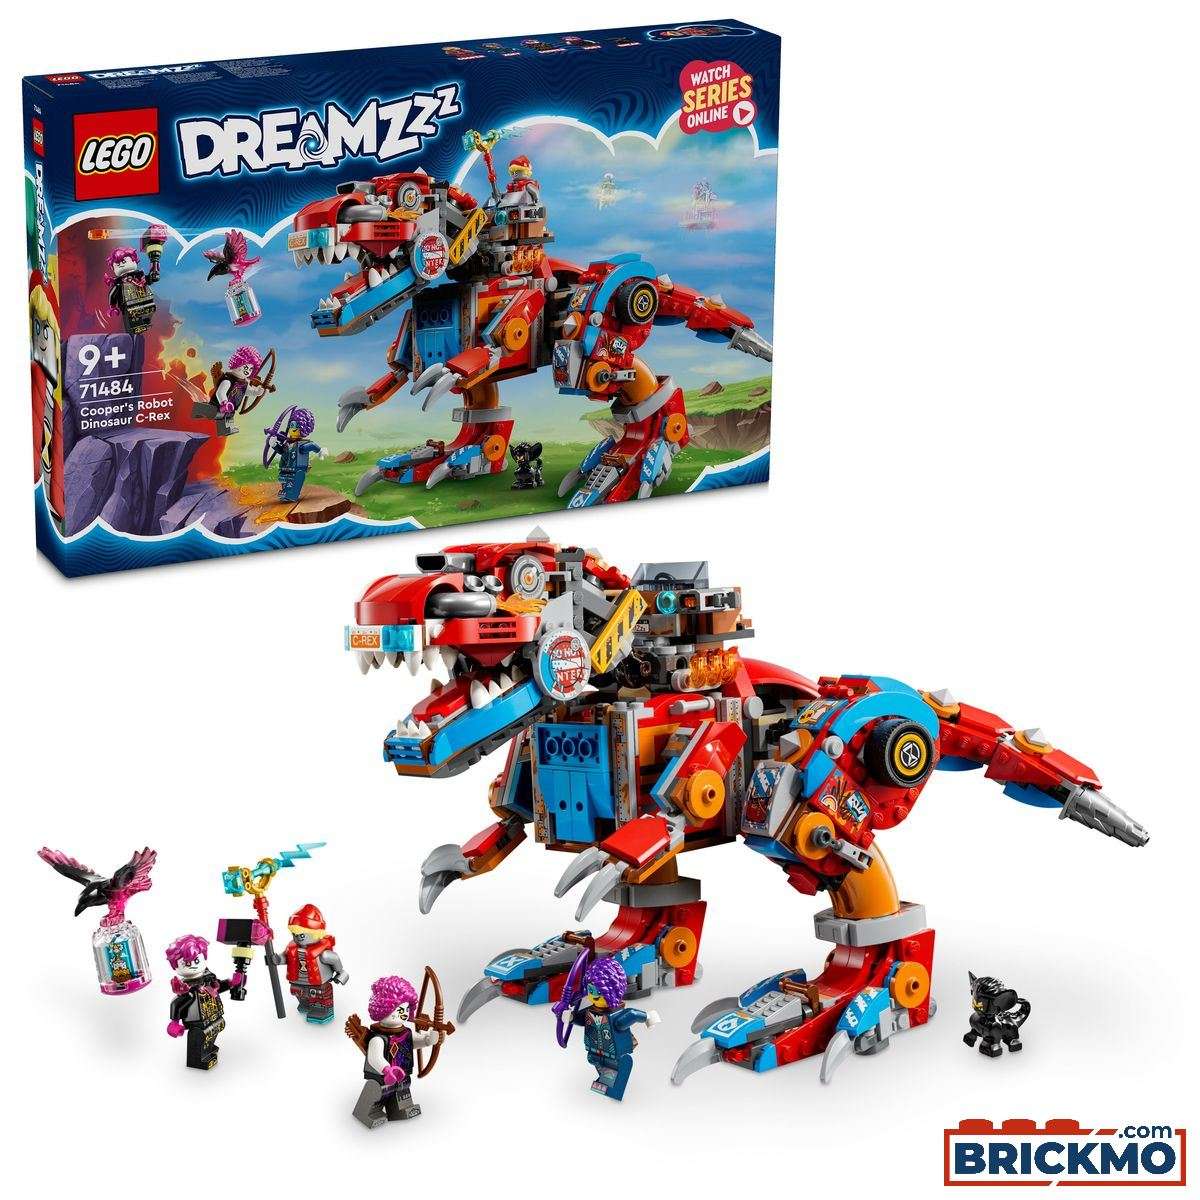 LEGO DreamZzz 71484 Cooper&#039;s Robot Dinosaur C-Rex 71484